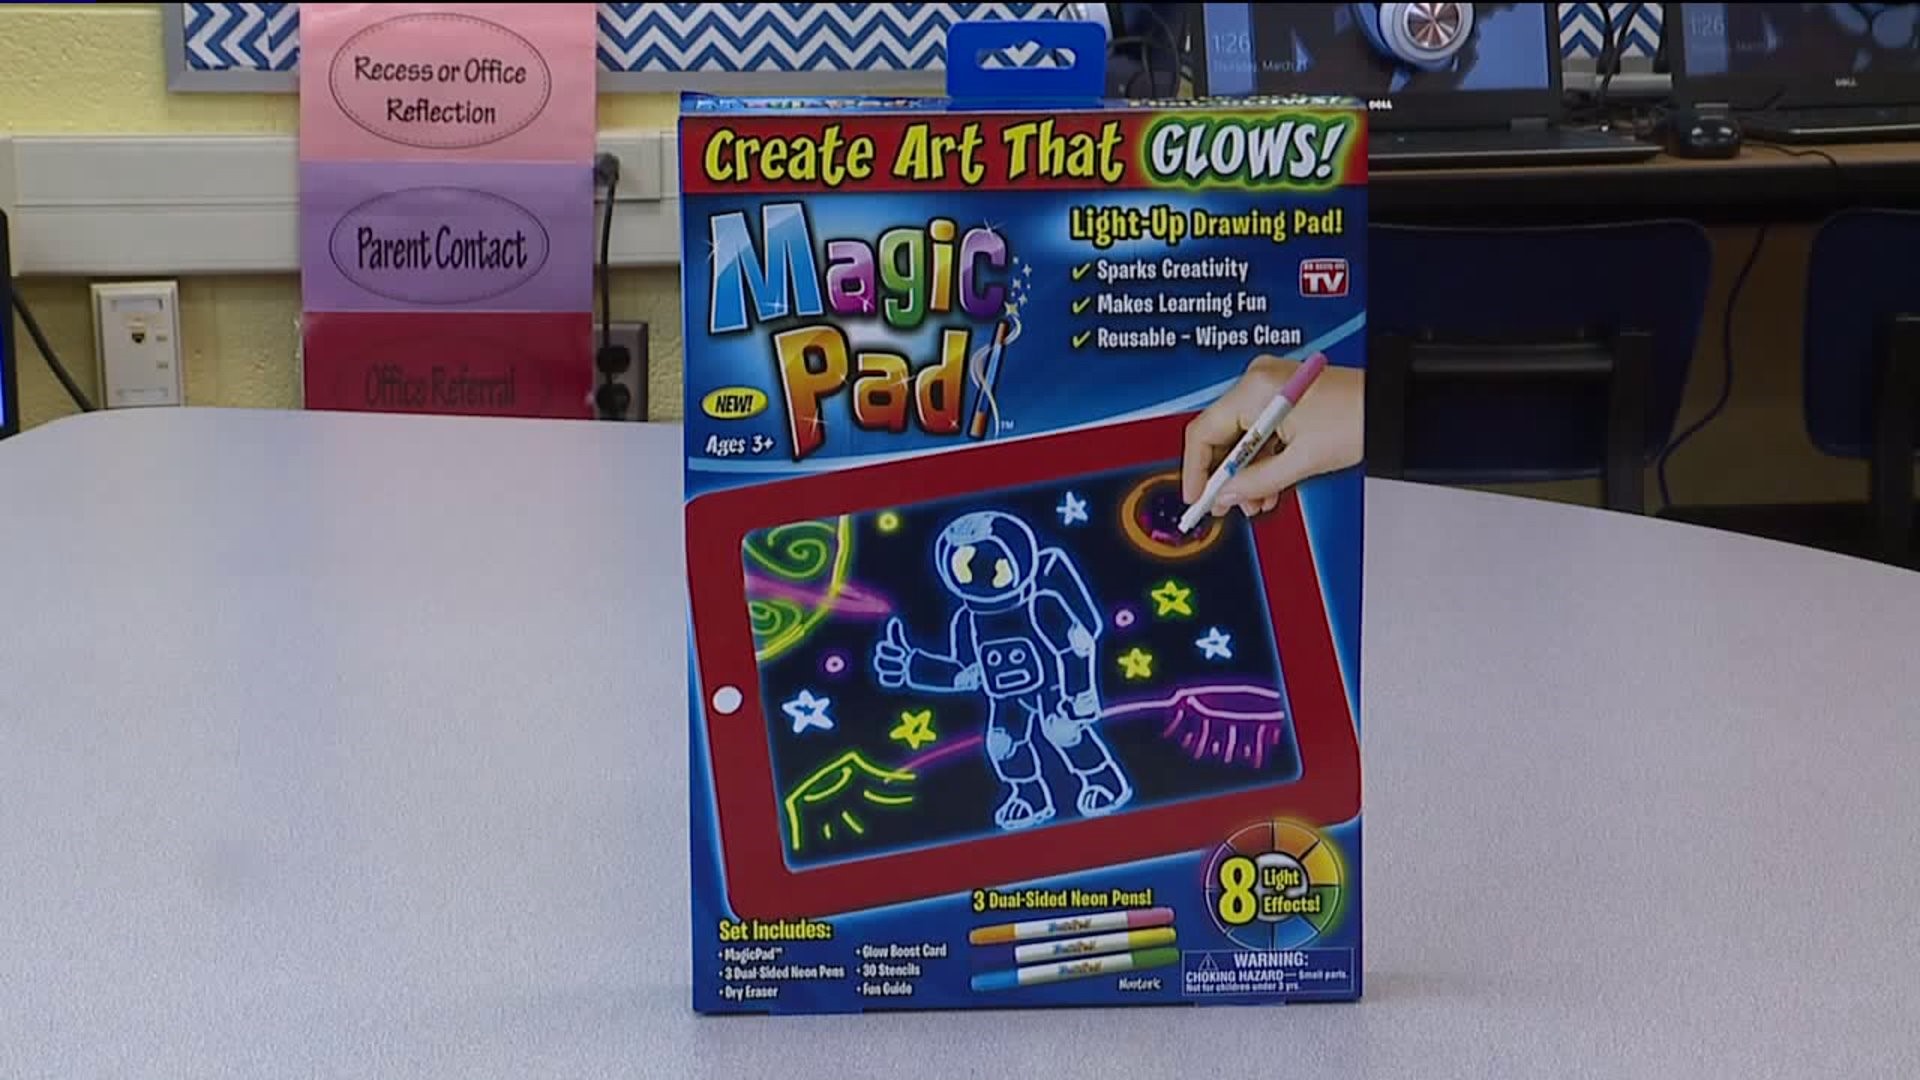 Magic Pad Light Up Drawing Pad! Sparks Creativity Makes Learning Fun Glow!